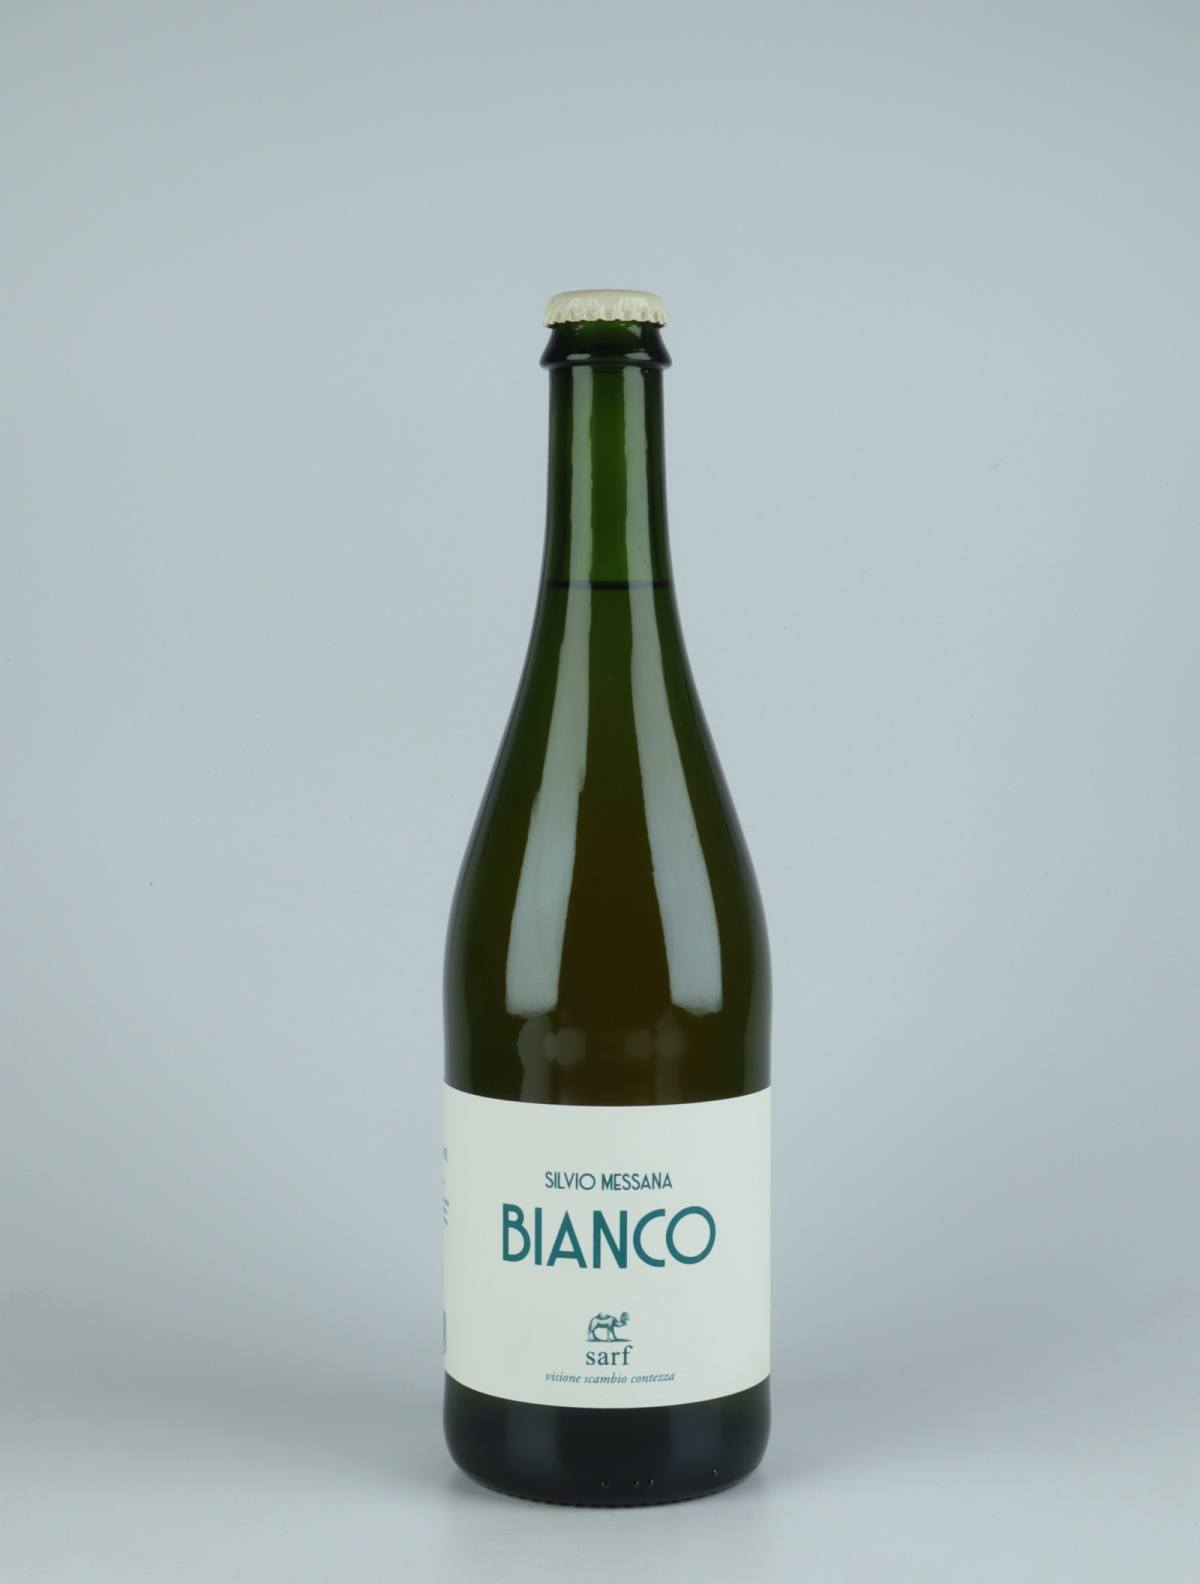 A bottle 2020 Bianco Orange wine from Silvio Messana, Tuscany in Italy